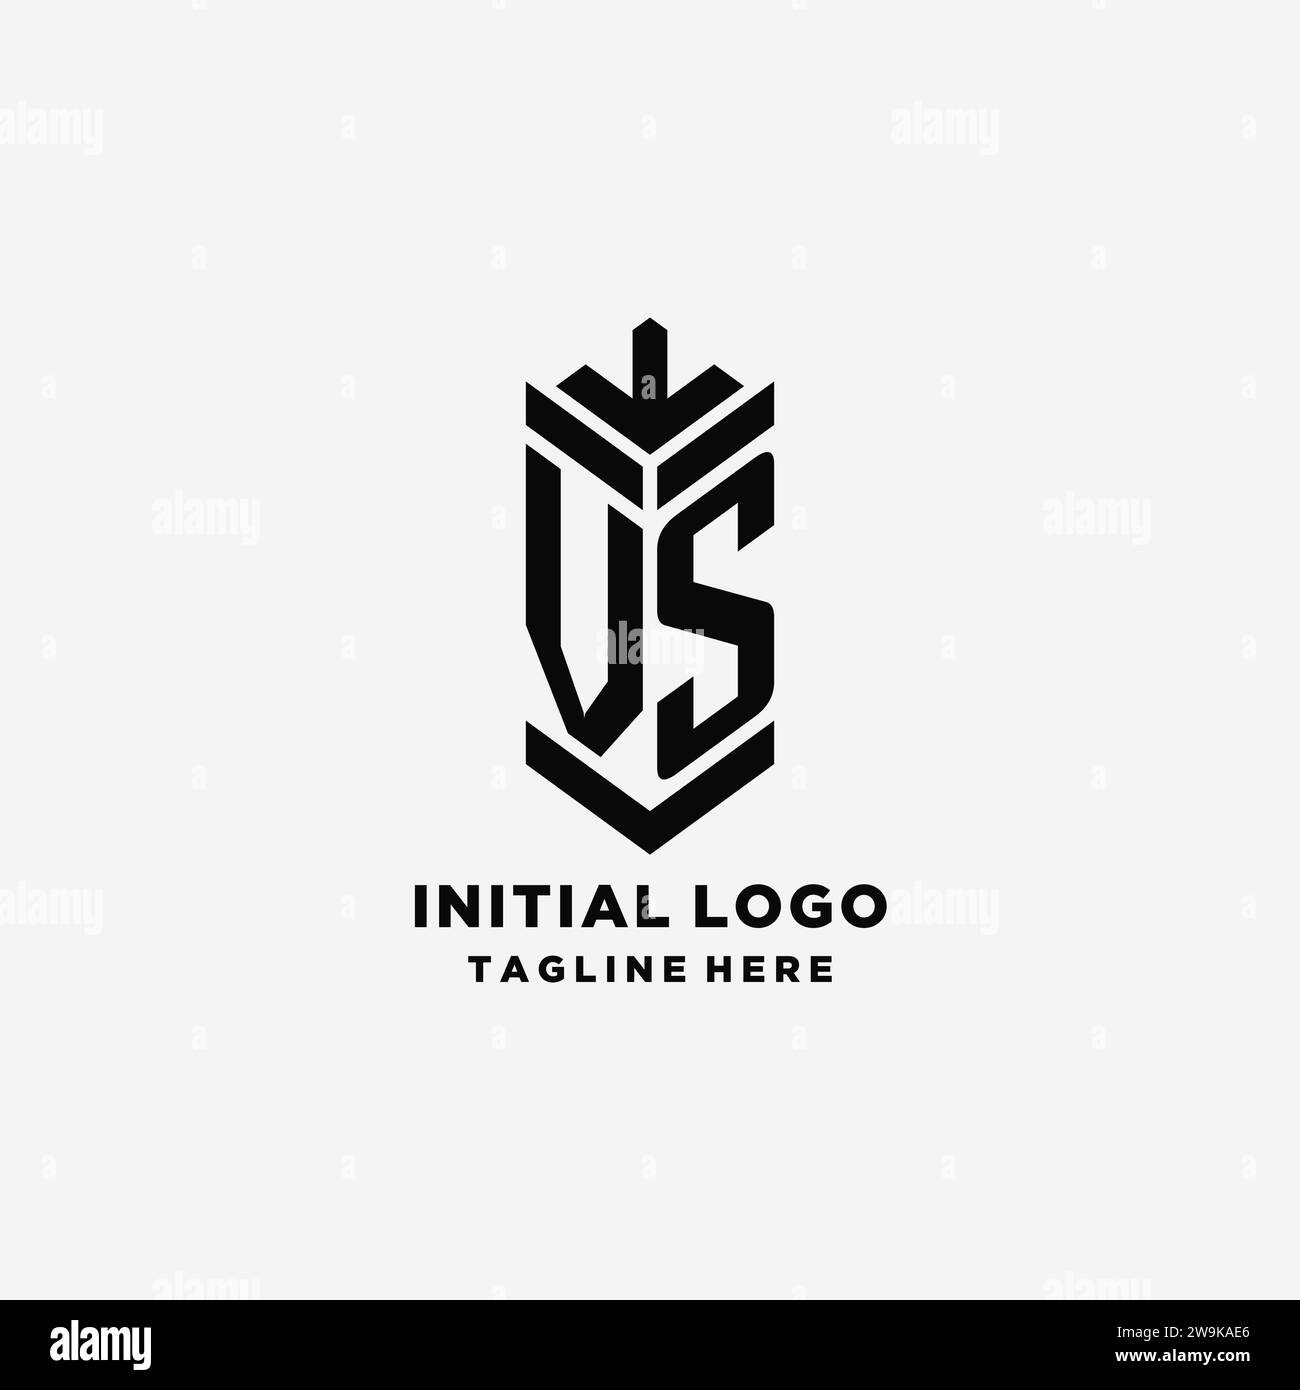 Initials VS shield logo design, creative monogram logo inspiration vector graphic Stock Vector